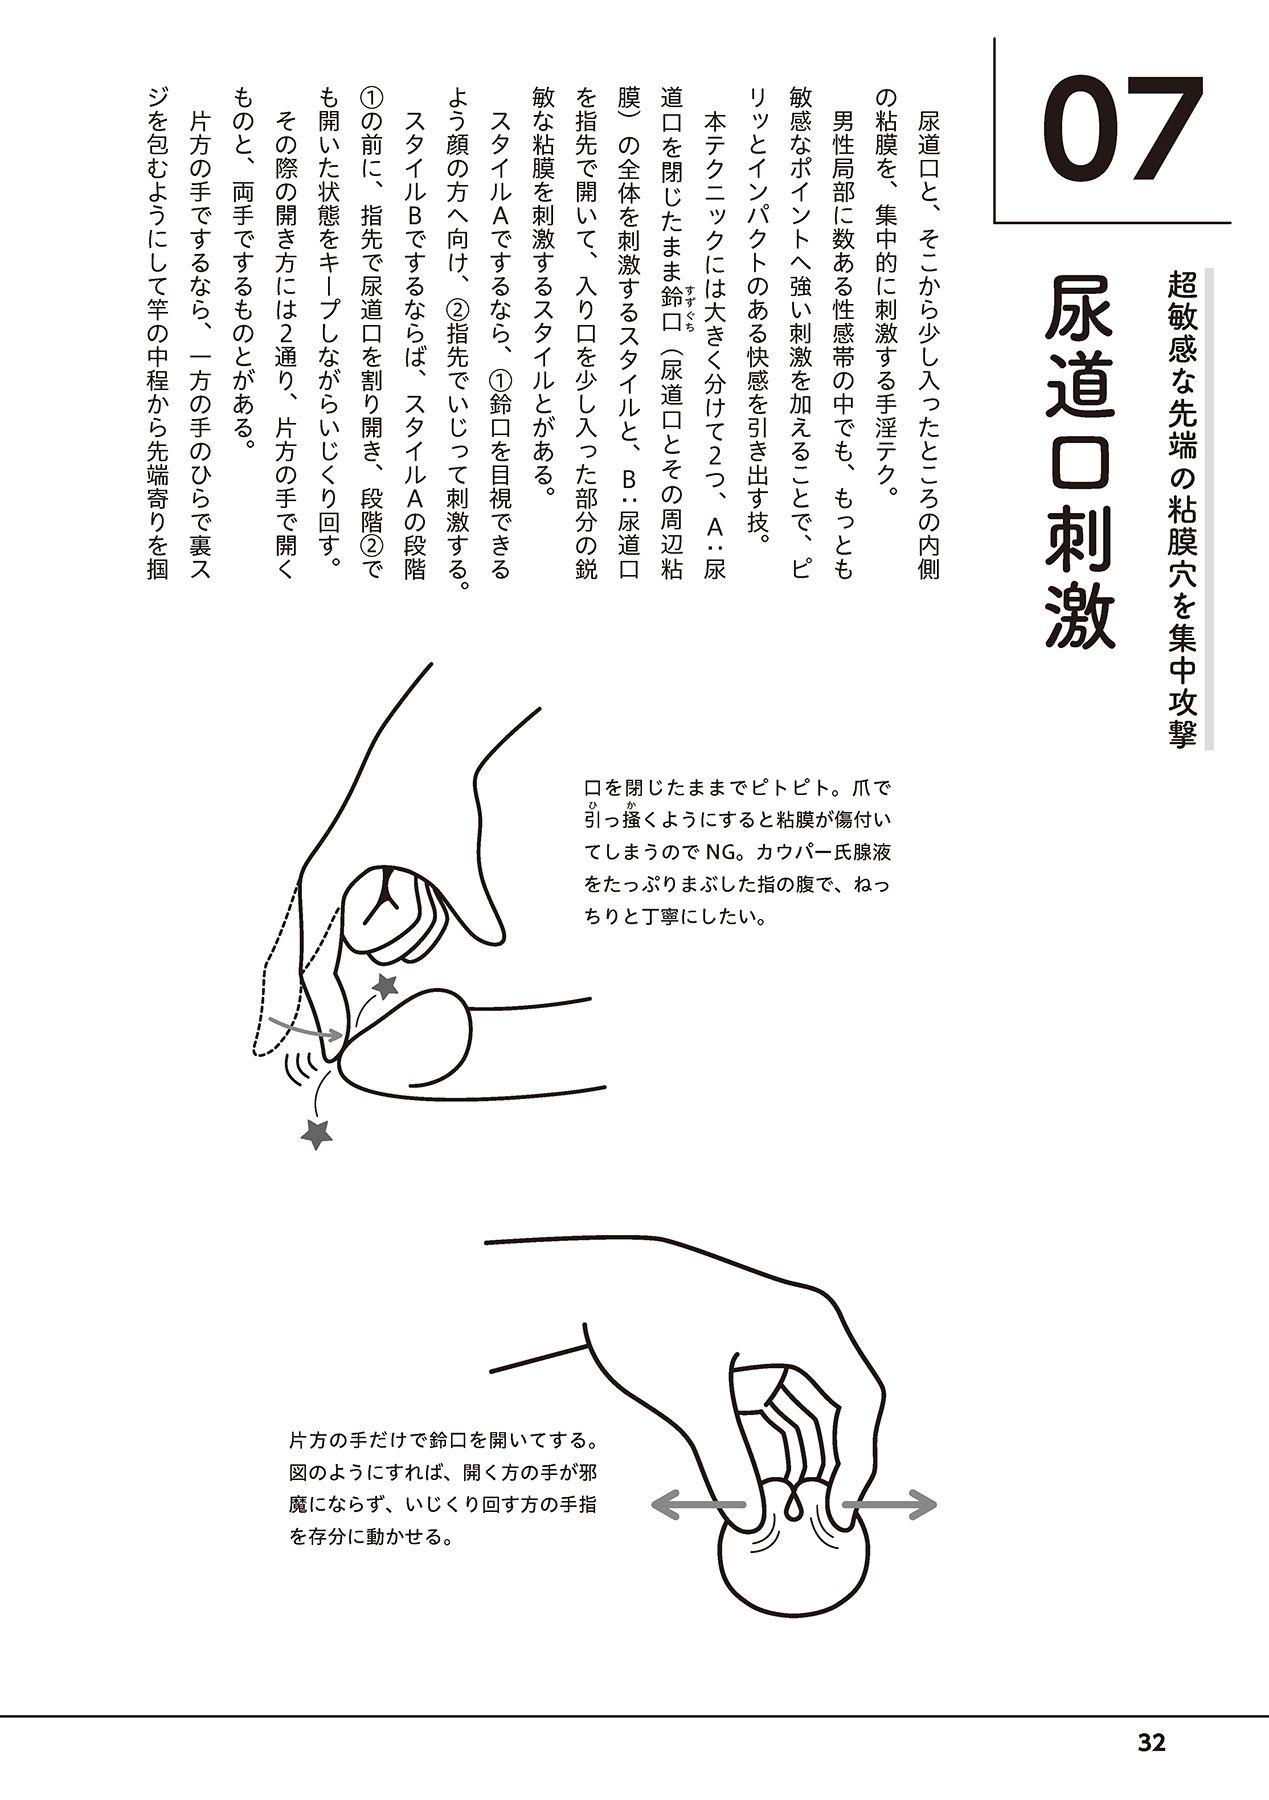 Otoko no Jii Onanie Kanzen Manual Illustration Han...... Onanie Play 33